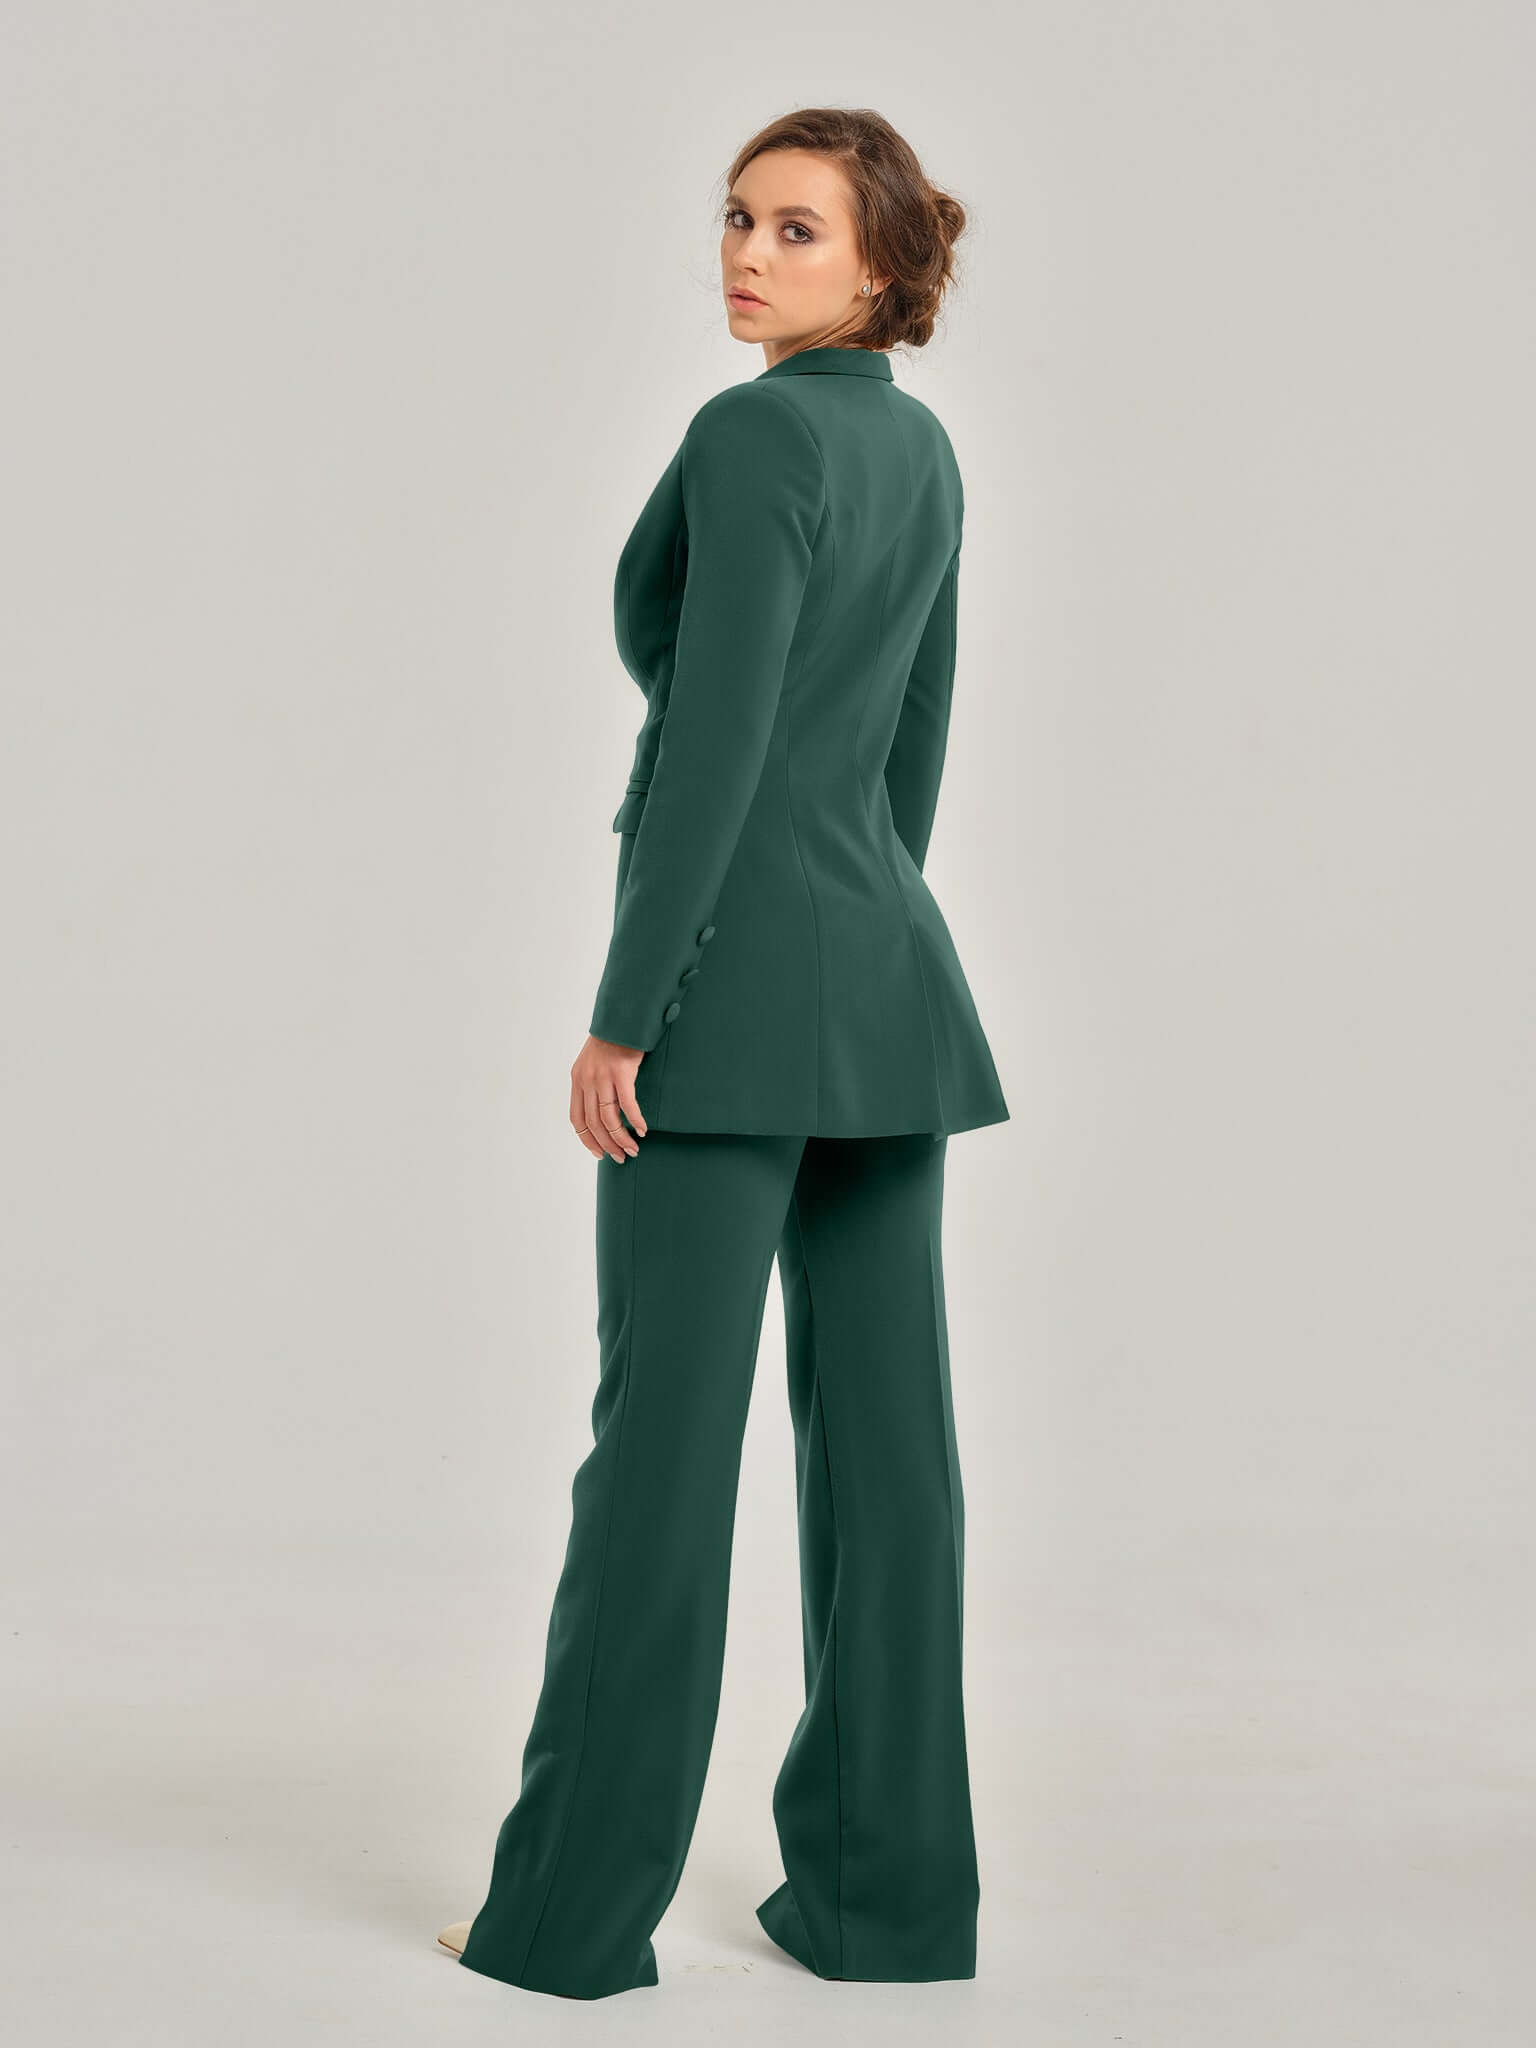 Emerald Dream High-Waist Flared Trousers by Tia Dorraine Women's Luxury Fashion Designer Clothing Brand